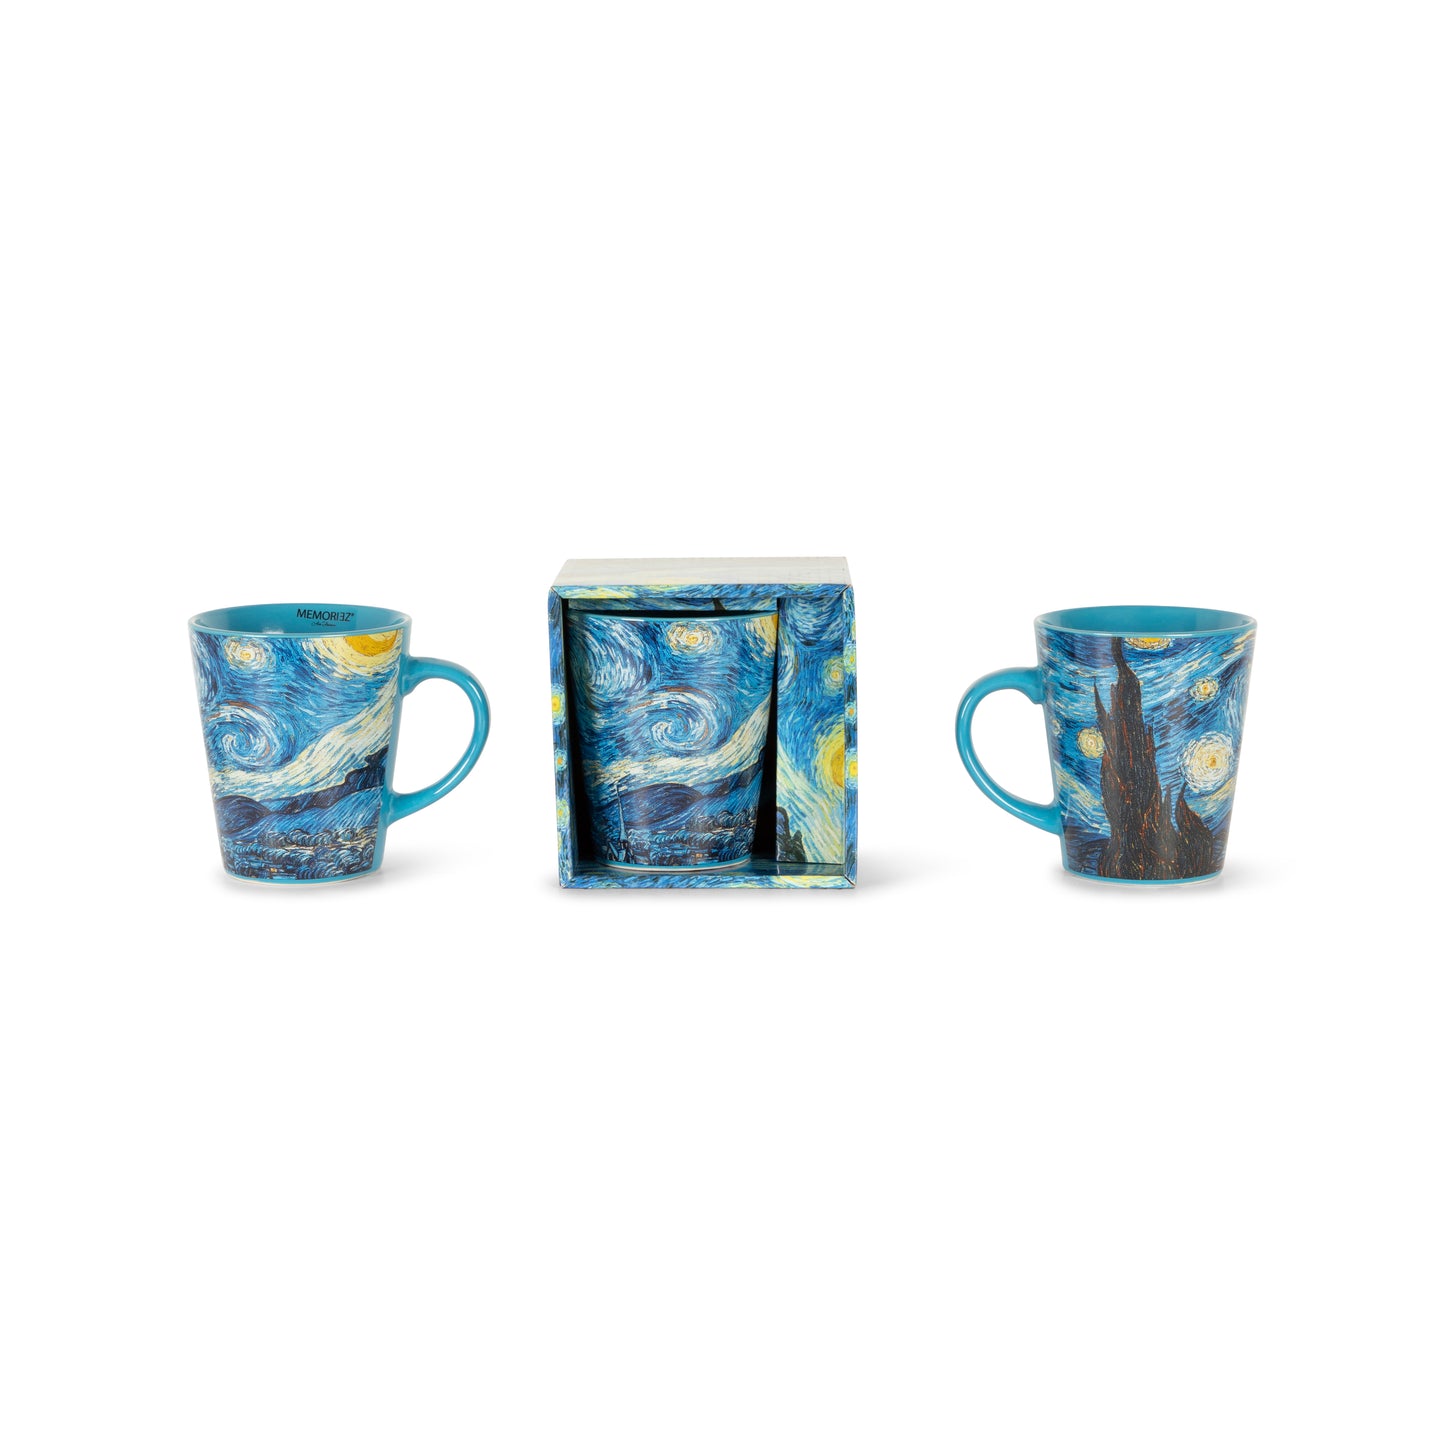 V-shape mug - Starry night - van Gogh